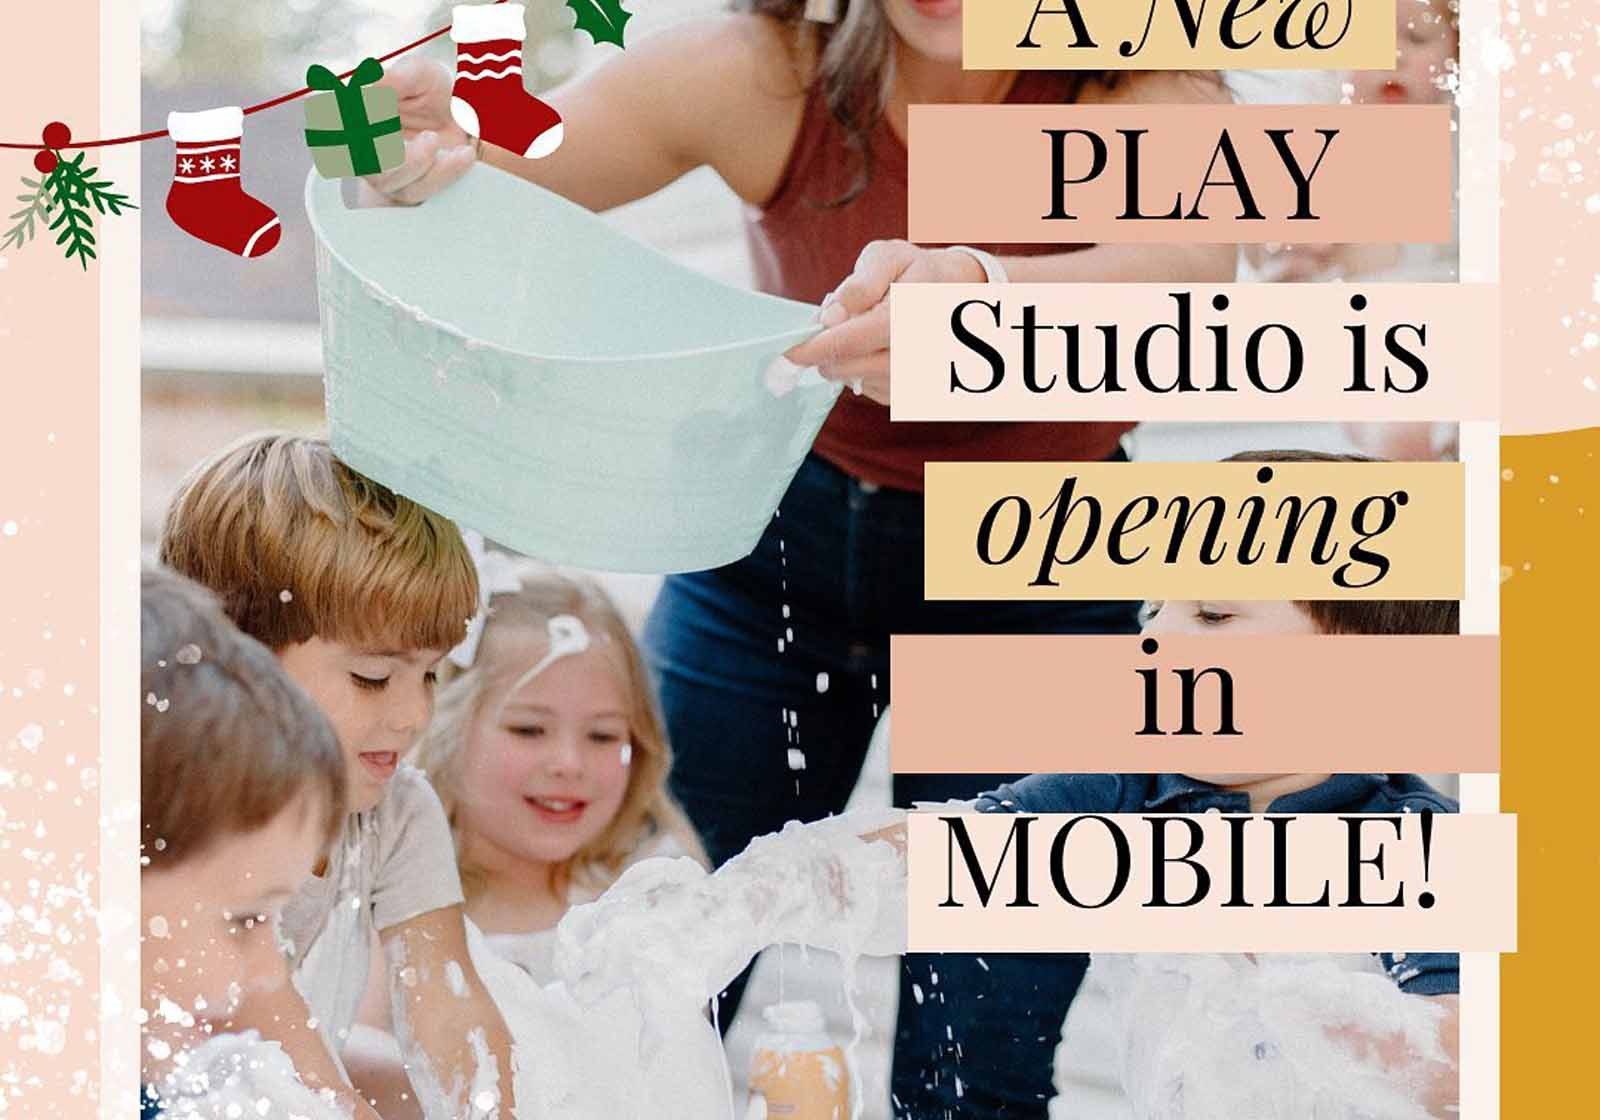 Bloom Play Studio Opens This Weekend In Mobile